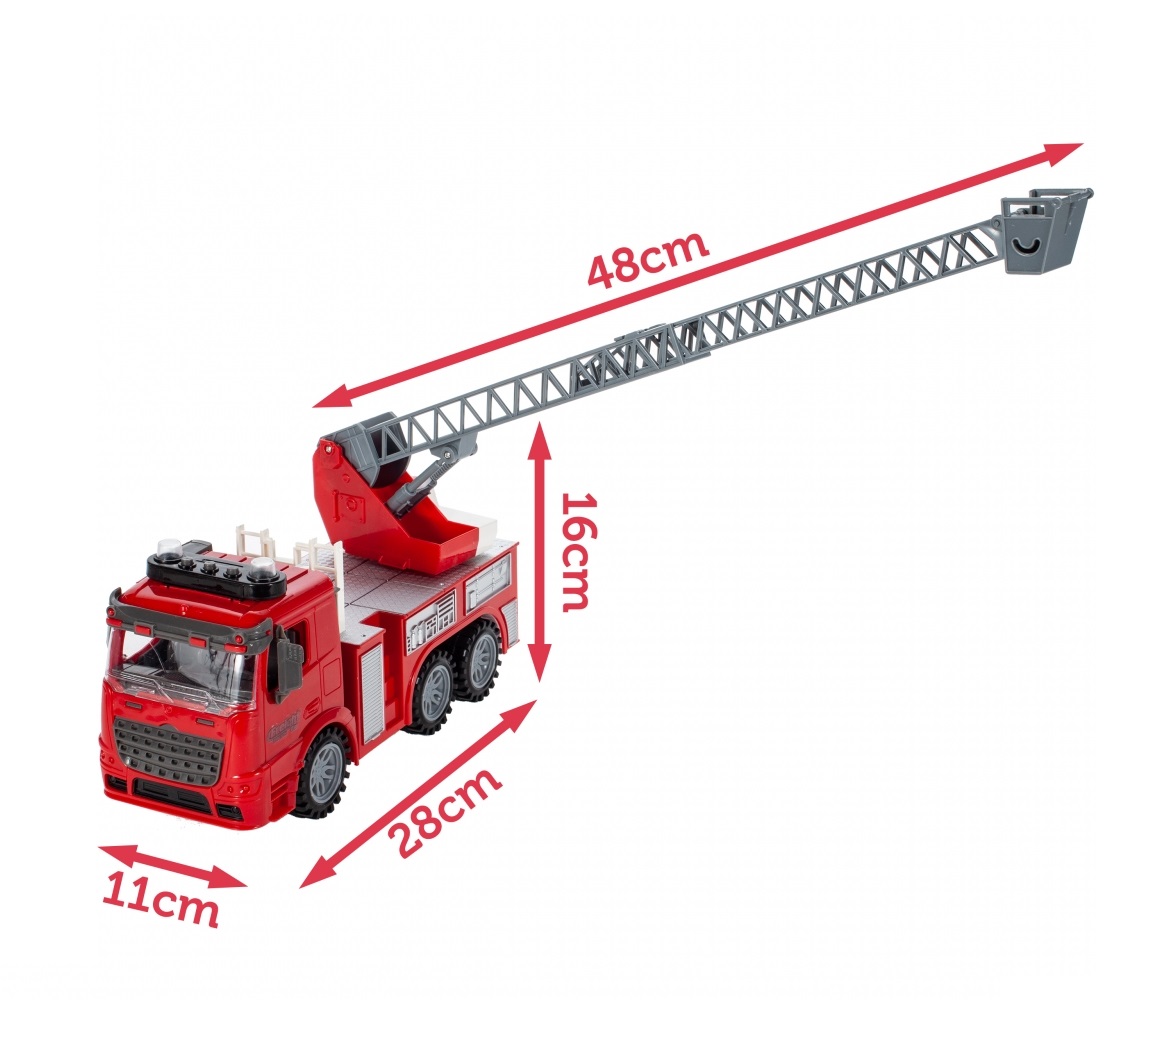 Masina de Pompieri Interactiva IDL, Fourios Red Car,  Dimensiuni 28.0 x 10.0 x 17.5 cm, Echipata cu Scara pliabila si rotativa, Roti mobile cu actionare, Sunete si Lumini superioare intermitente, Culoare Rosie